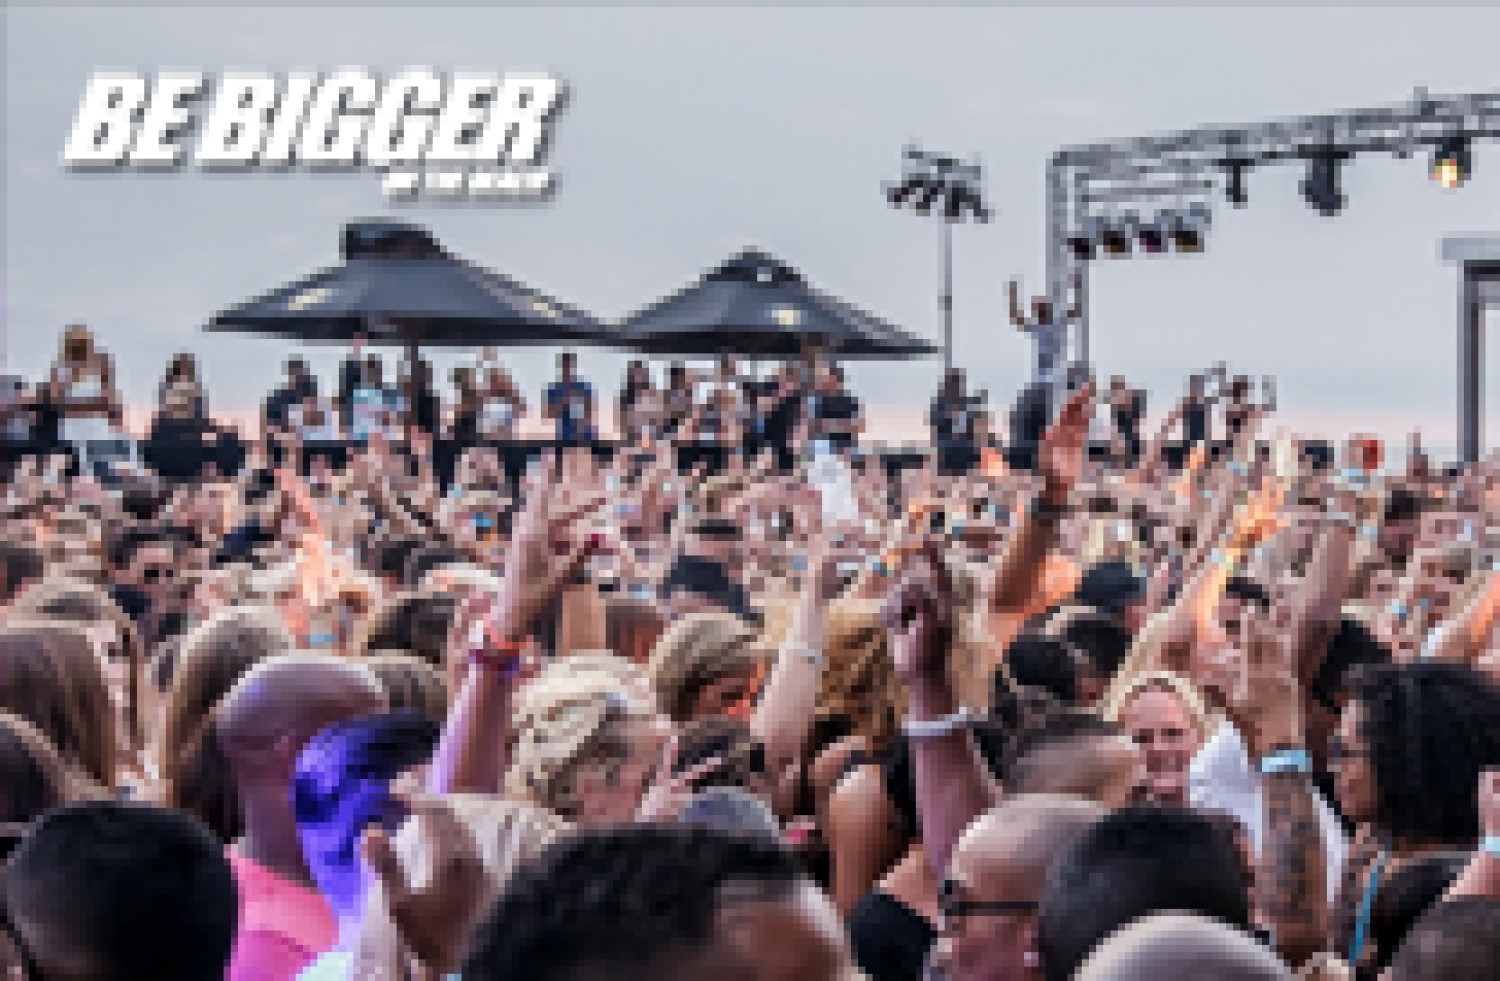 Party nieuws: Be Bigger, zondag 7 mei bij beachclub Bloomingdale!